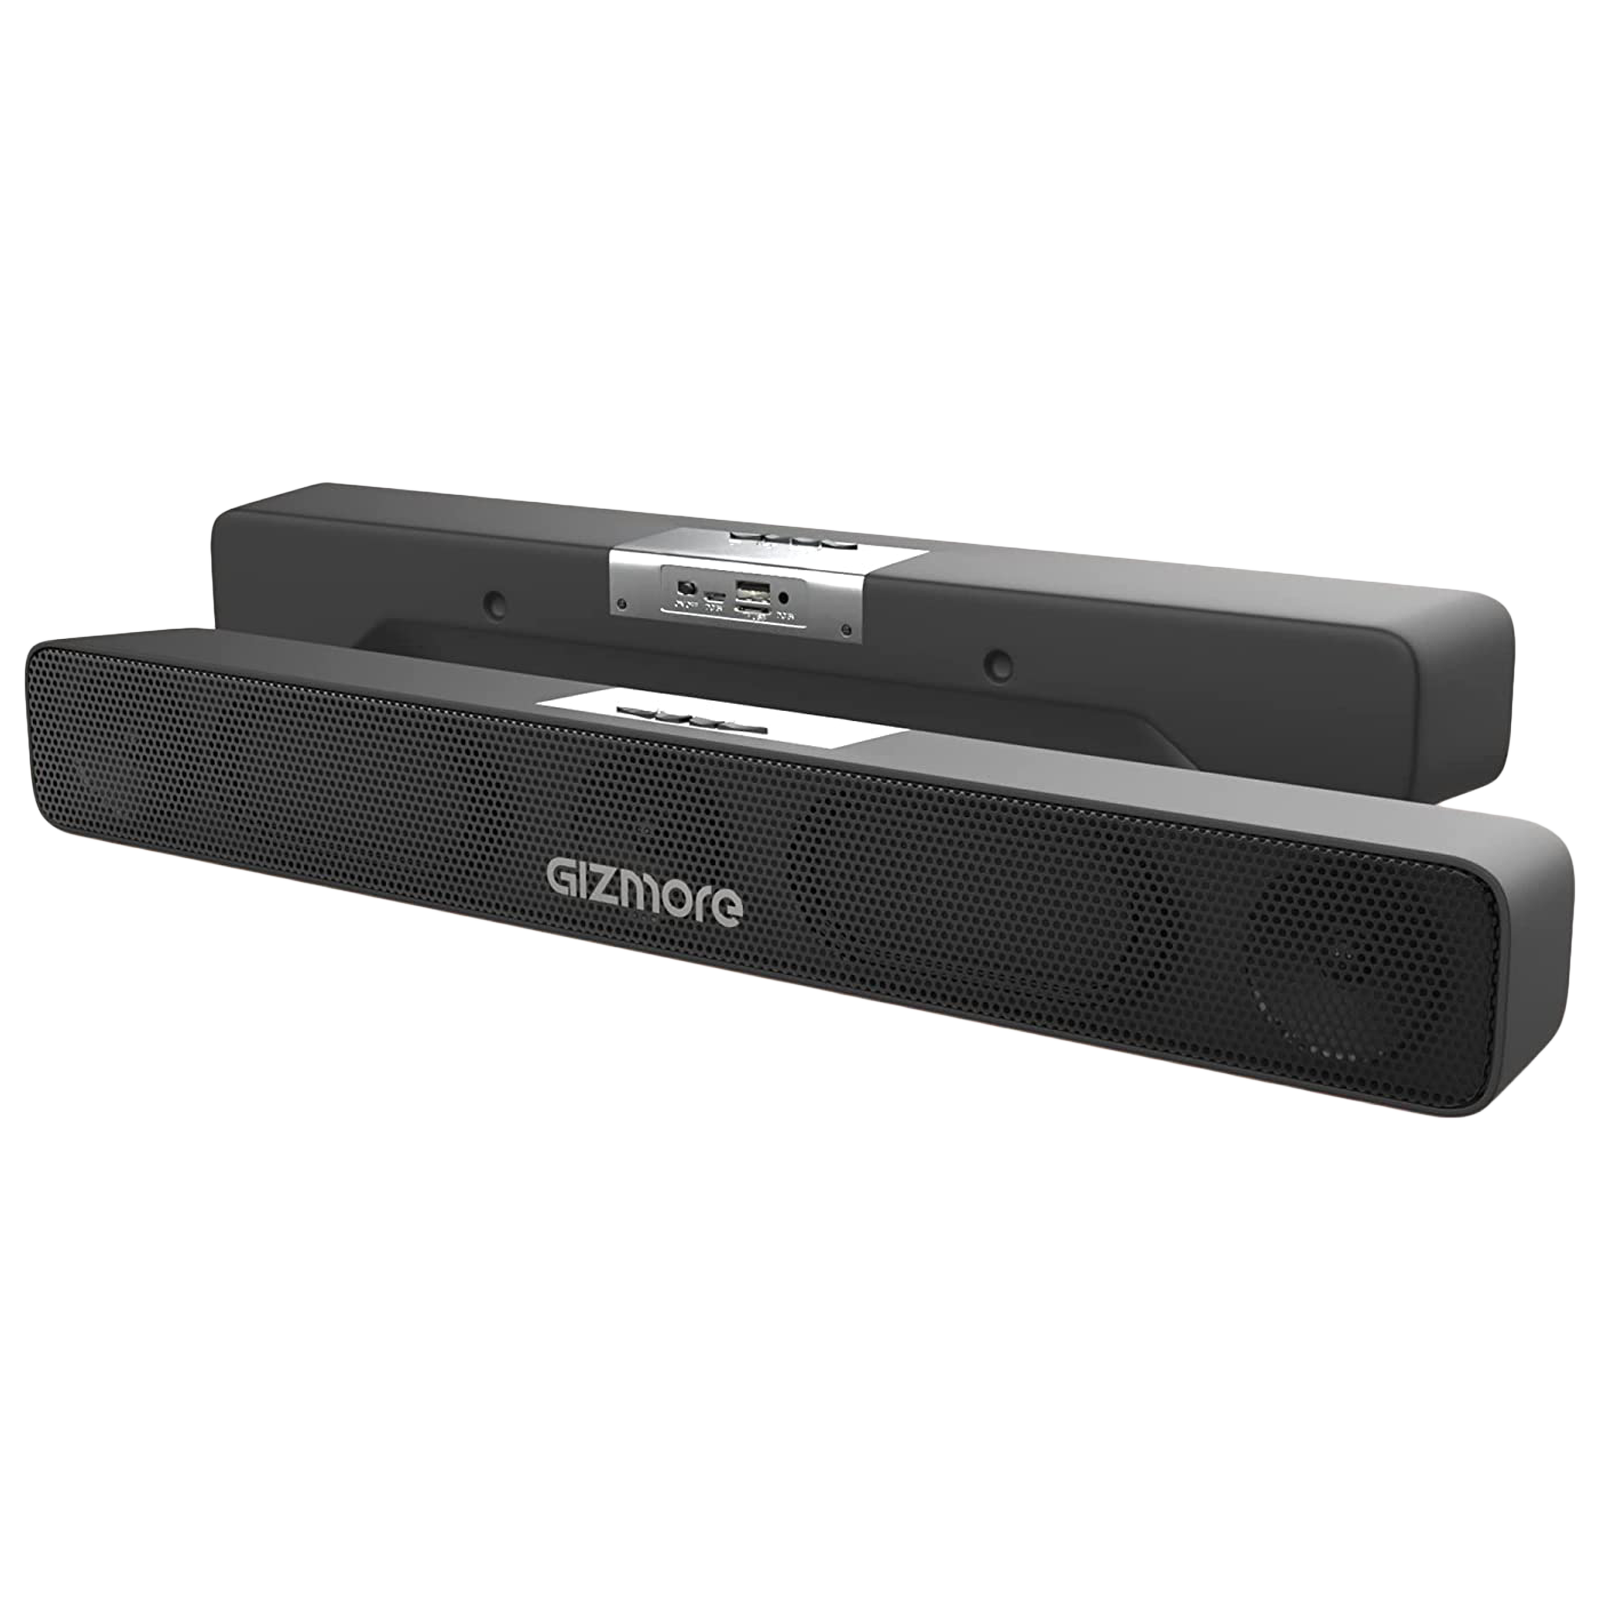 GIZmore Gizbar 900 10W Bluetooth Soundbar (Booming Bass, 2.0 Channel, Black)